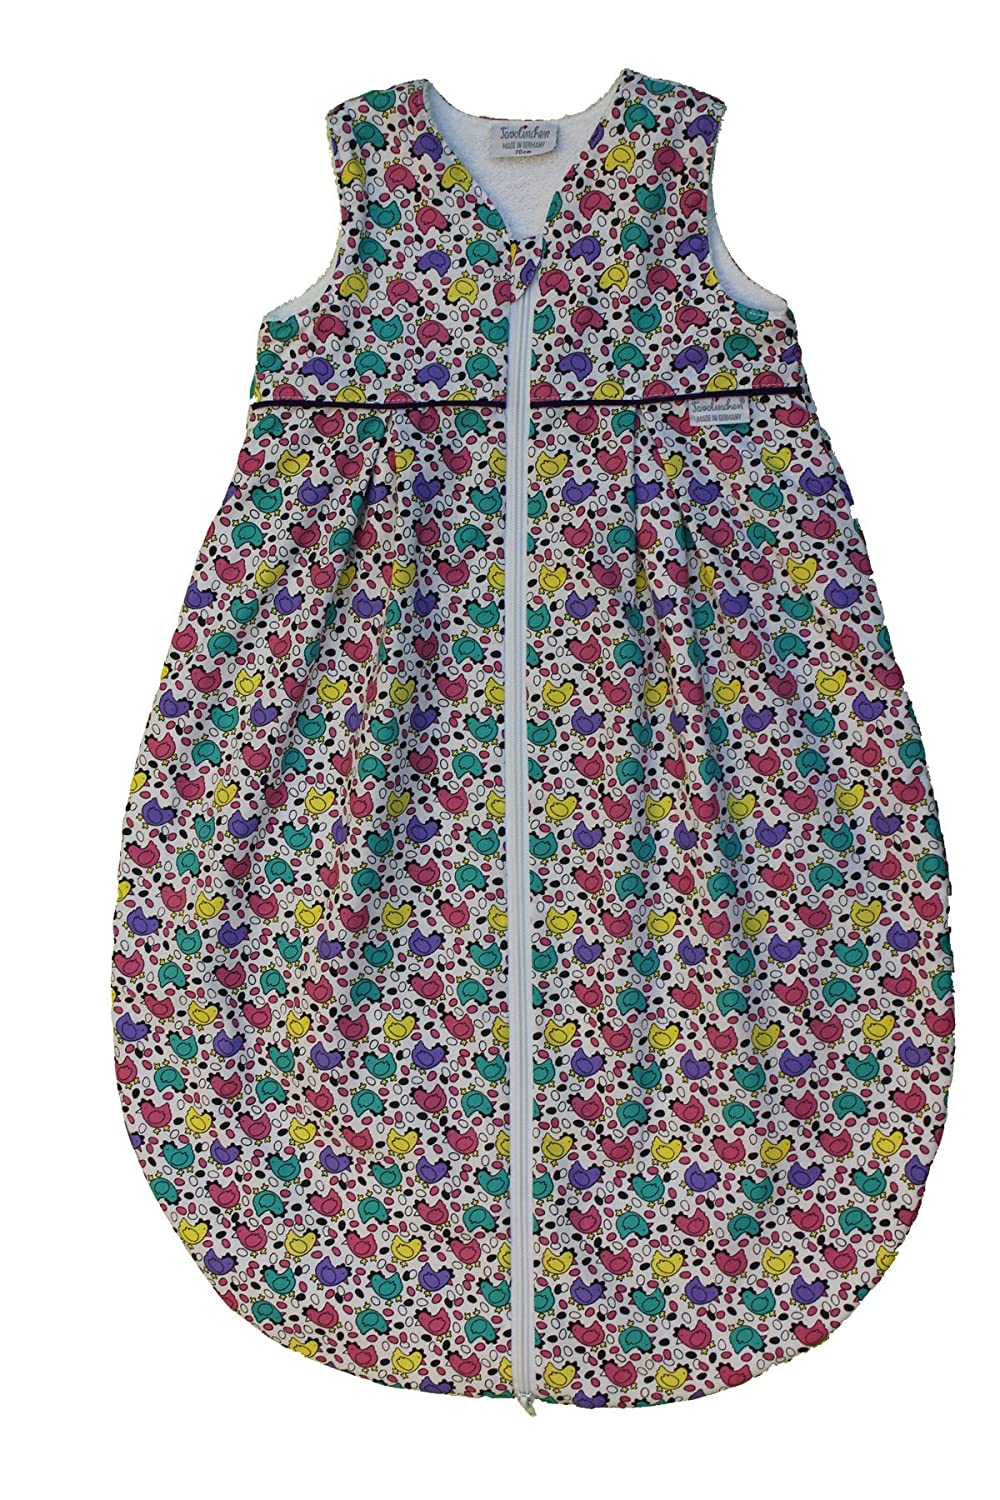 Tavolinchen 35/350 Sleeping Bag Terry Cloth with Multi-Coloured Chicks – 110 cm 90 cm original